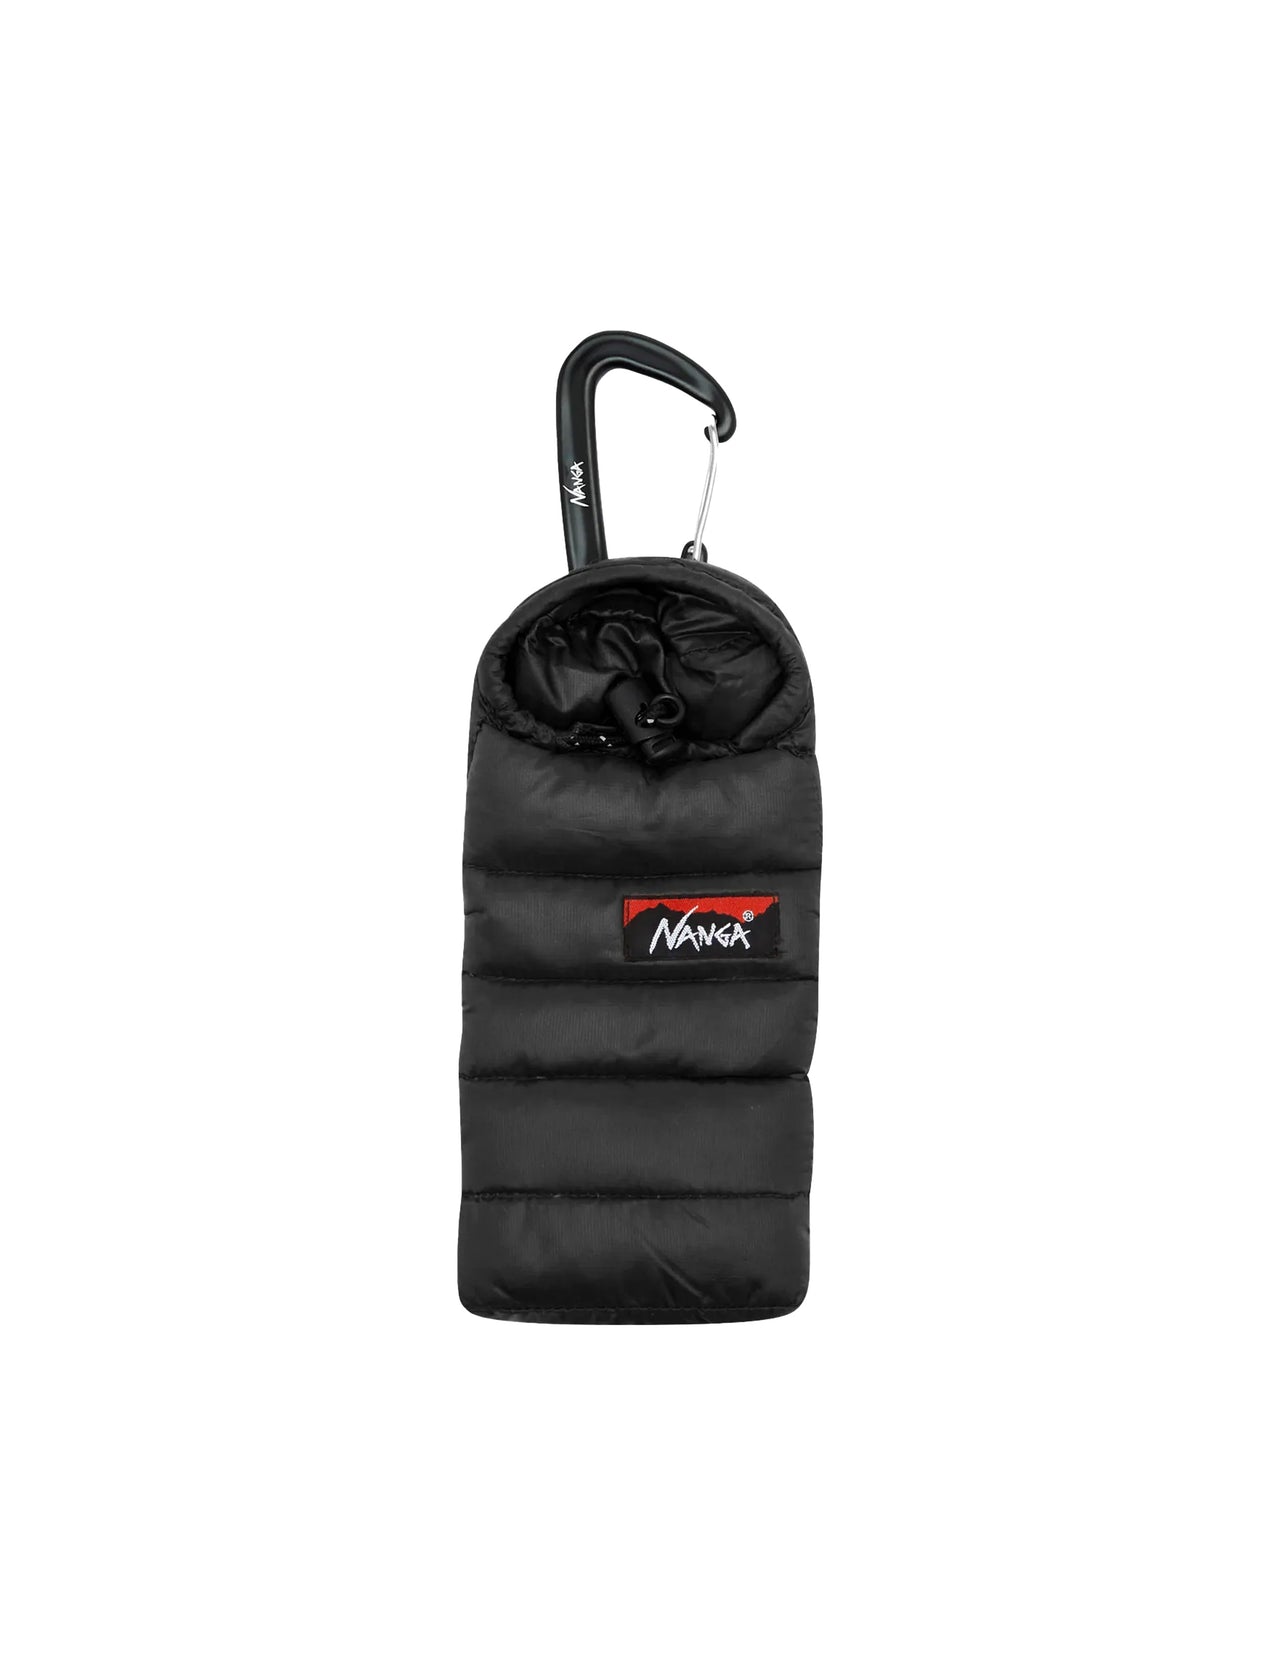 Mini Sleeping Bag Phone Case in Black